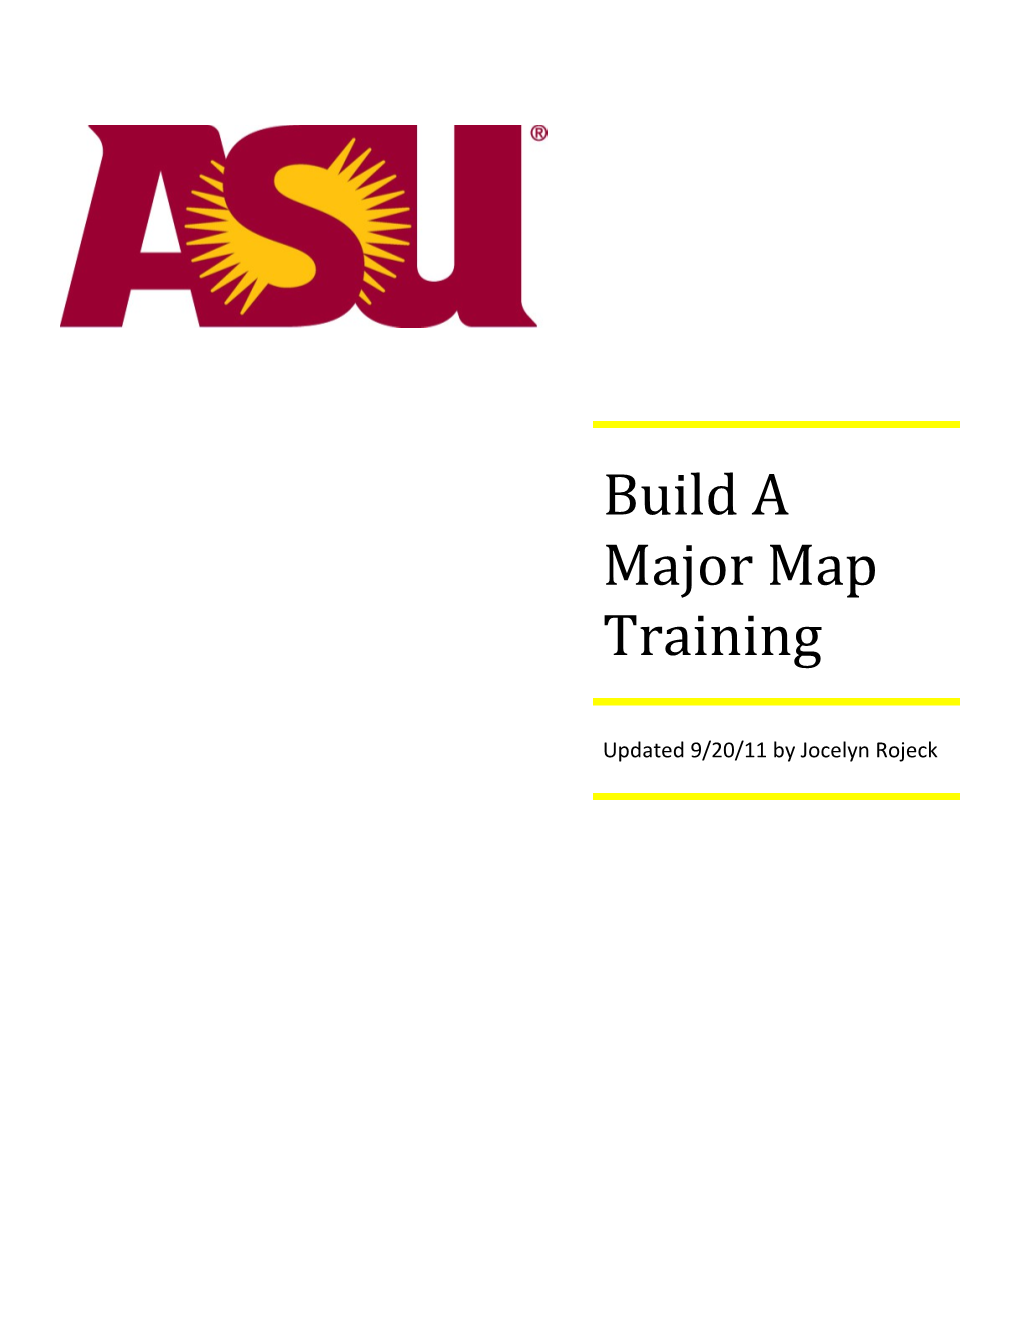 Build a Major Map Training